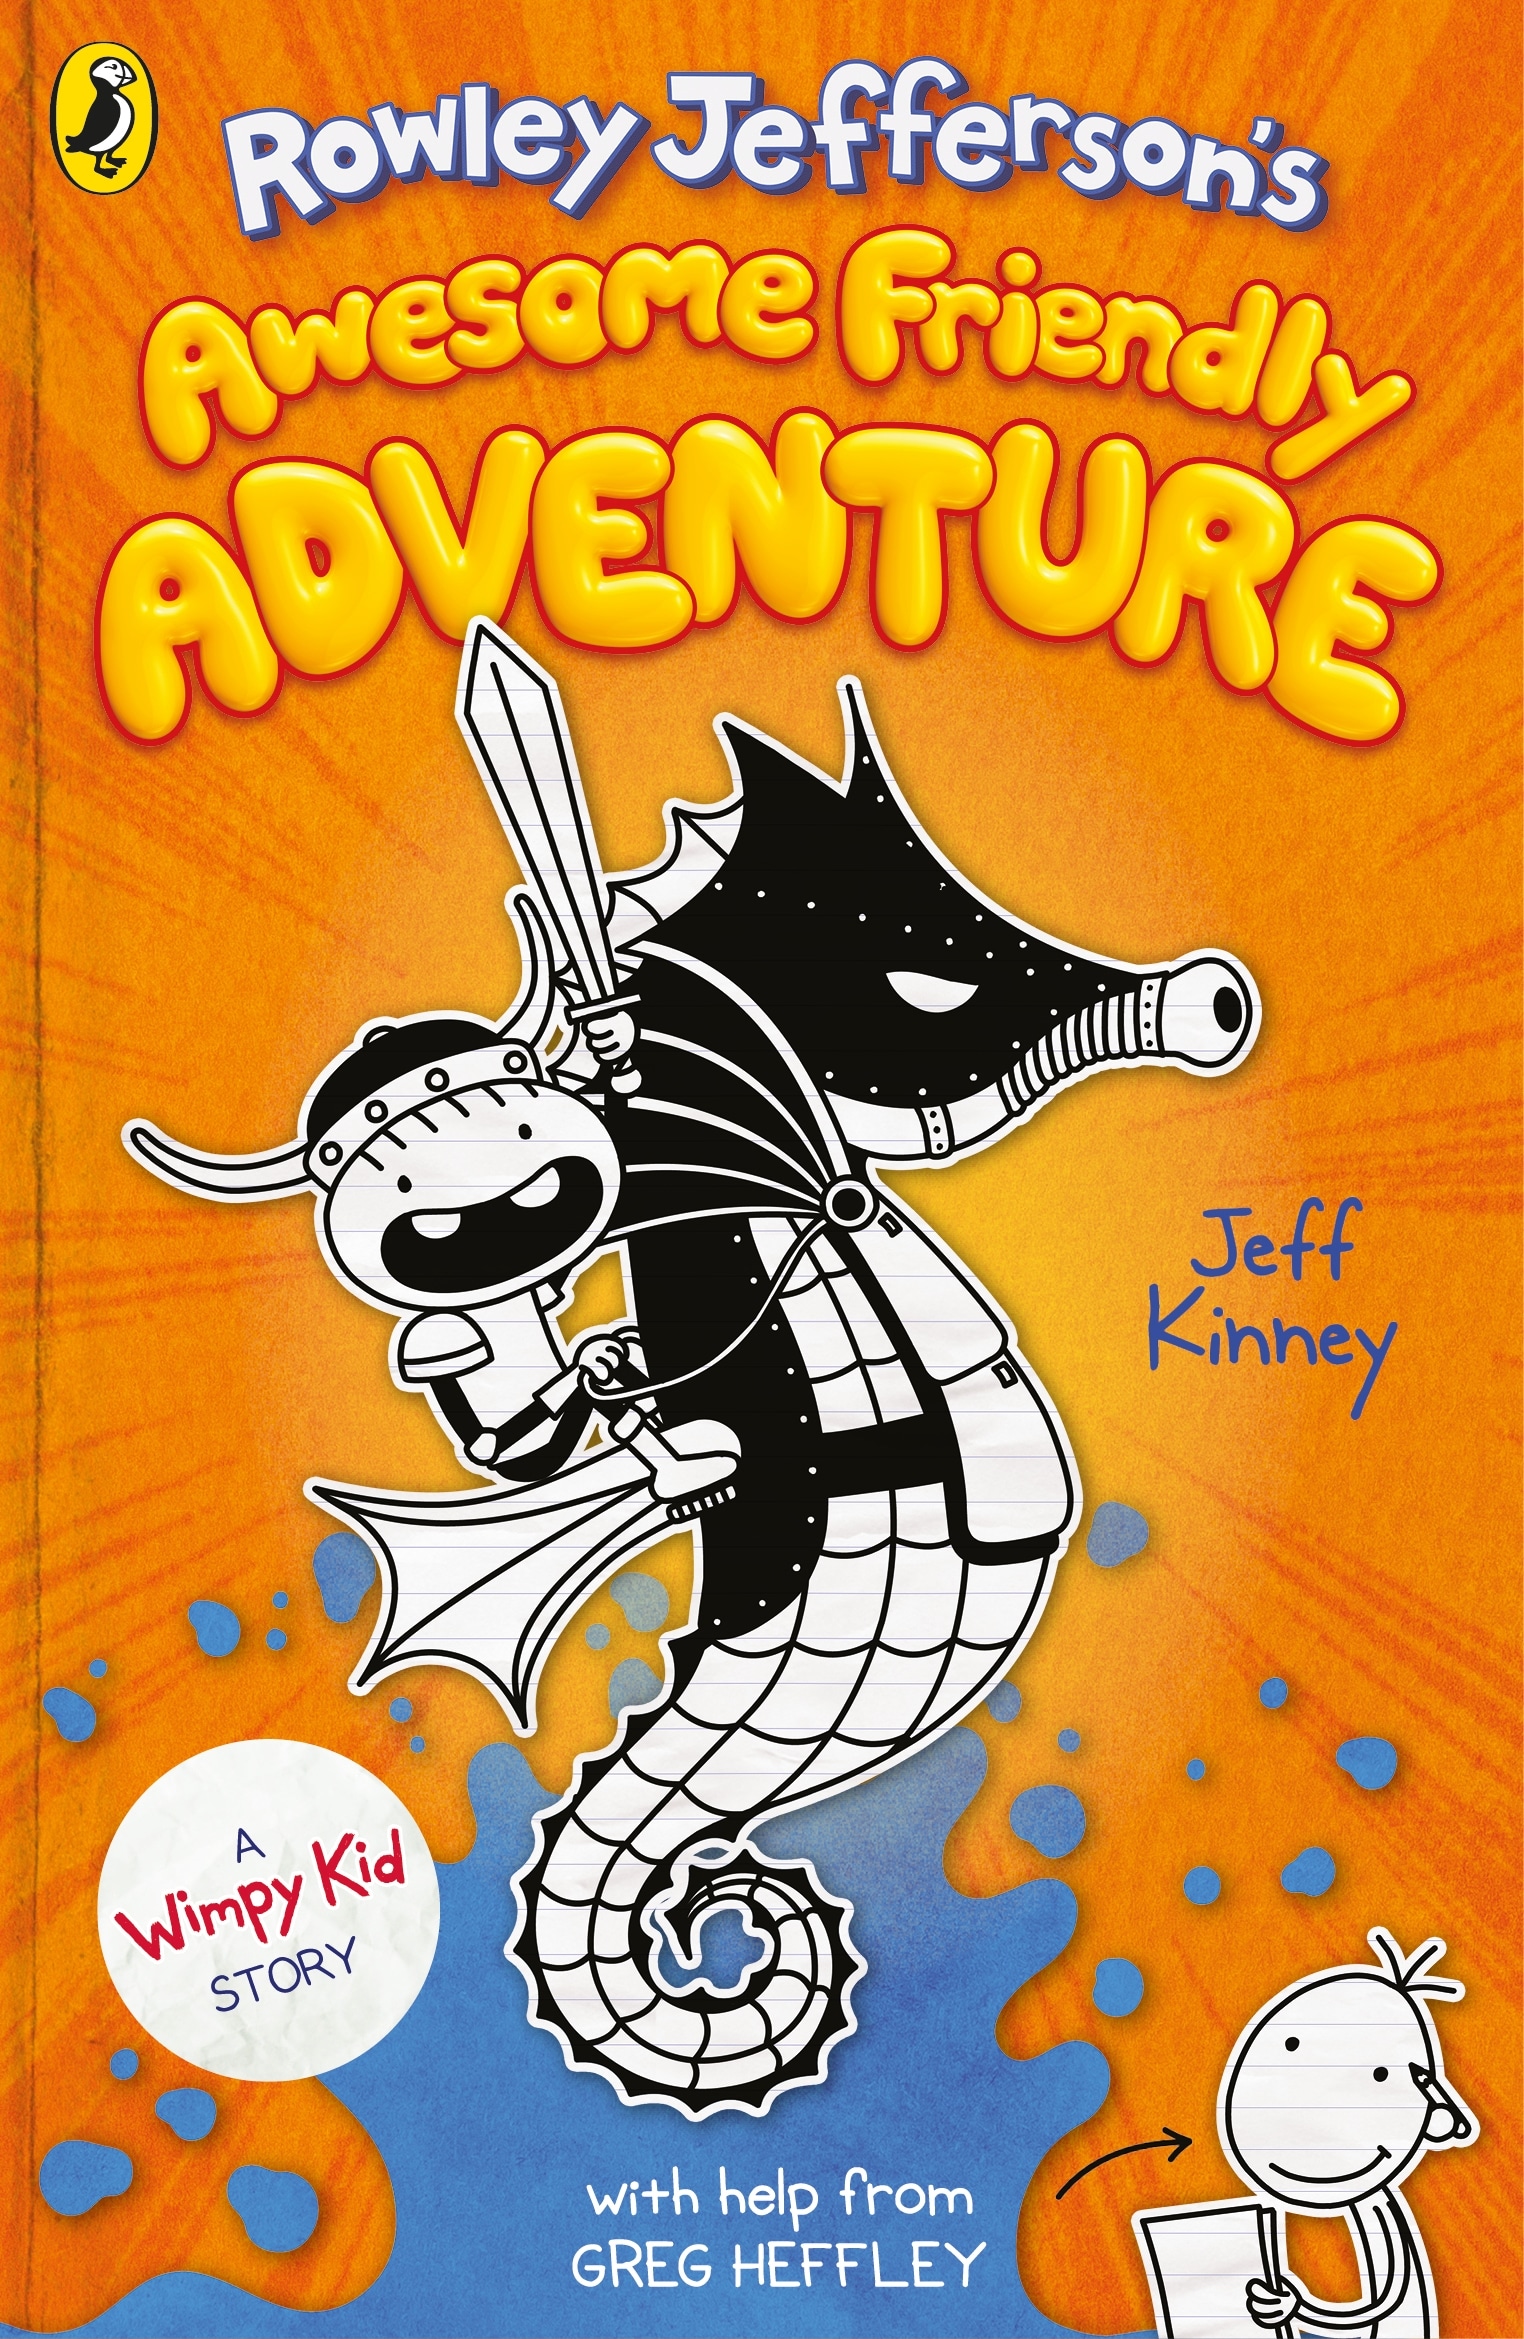 Book “Rowley Jefferson's Awesome Friendly Adventure” by Jeff Kinney — August 4, 2020